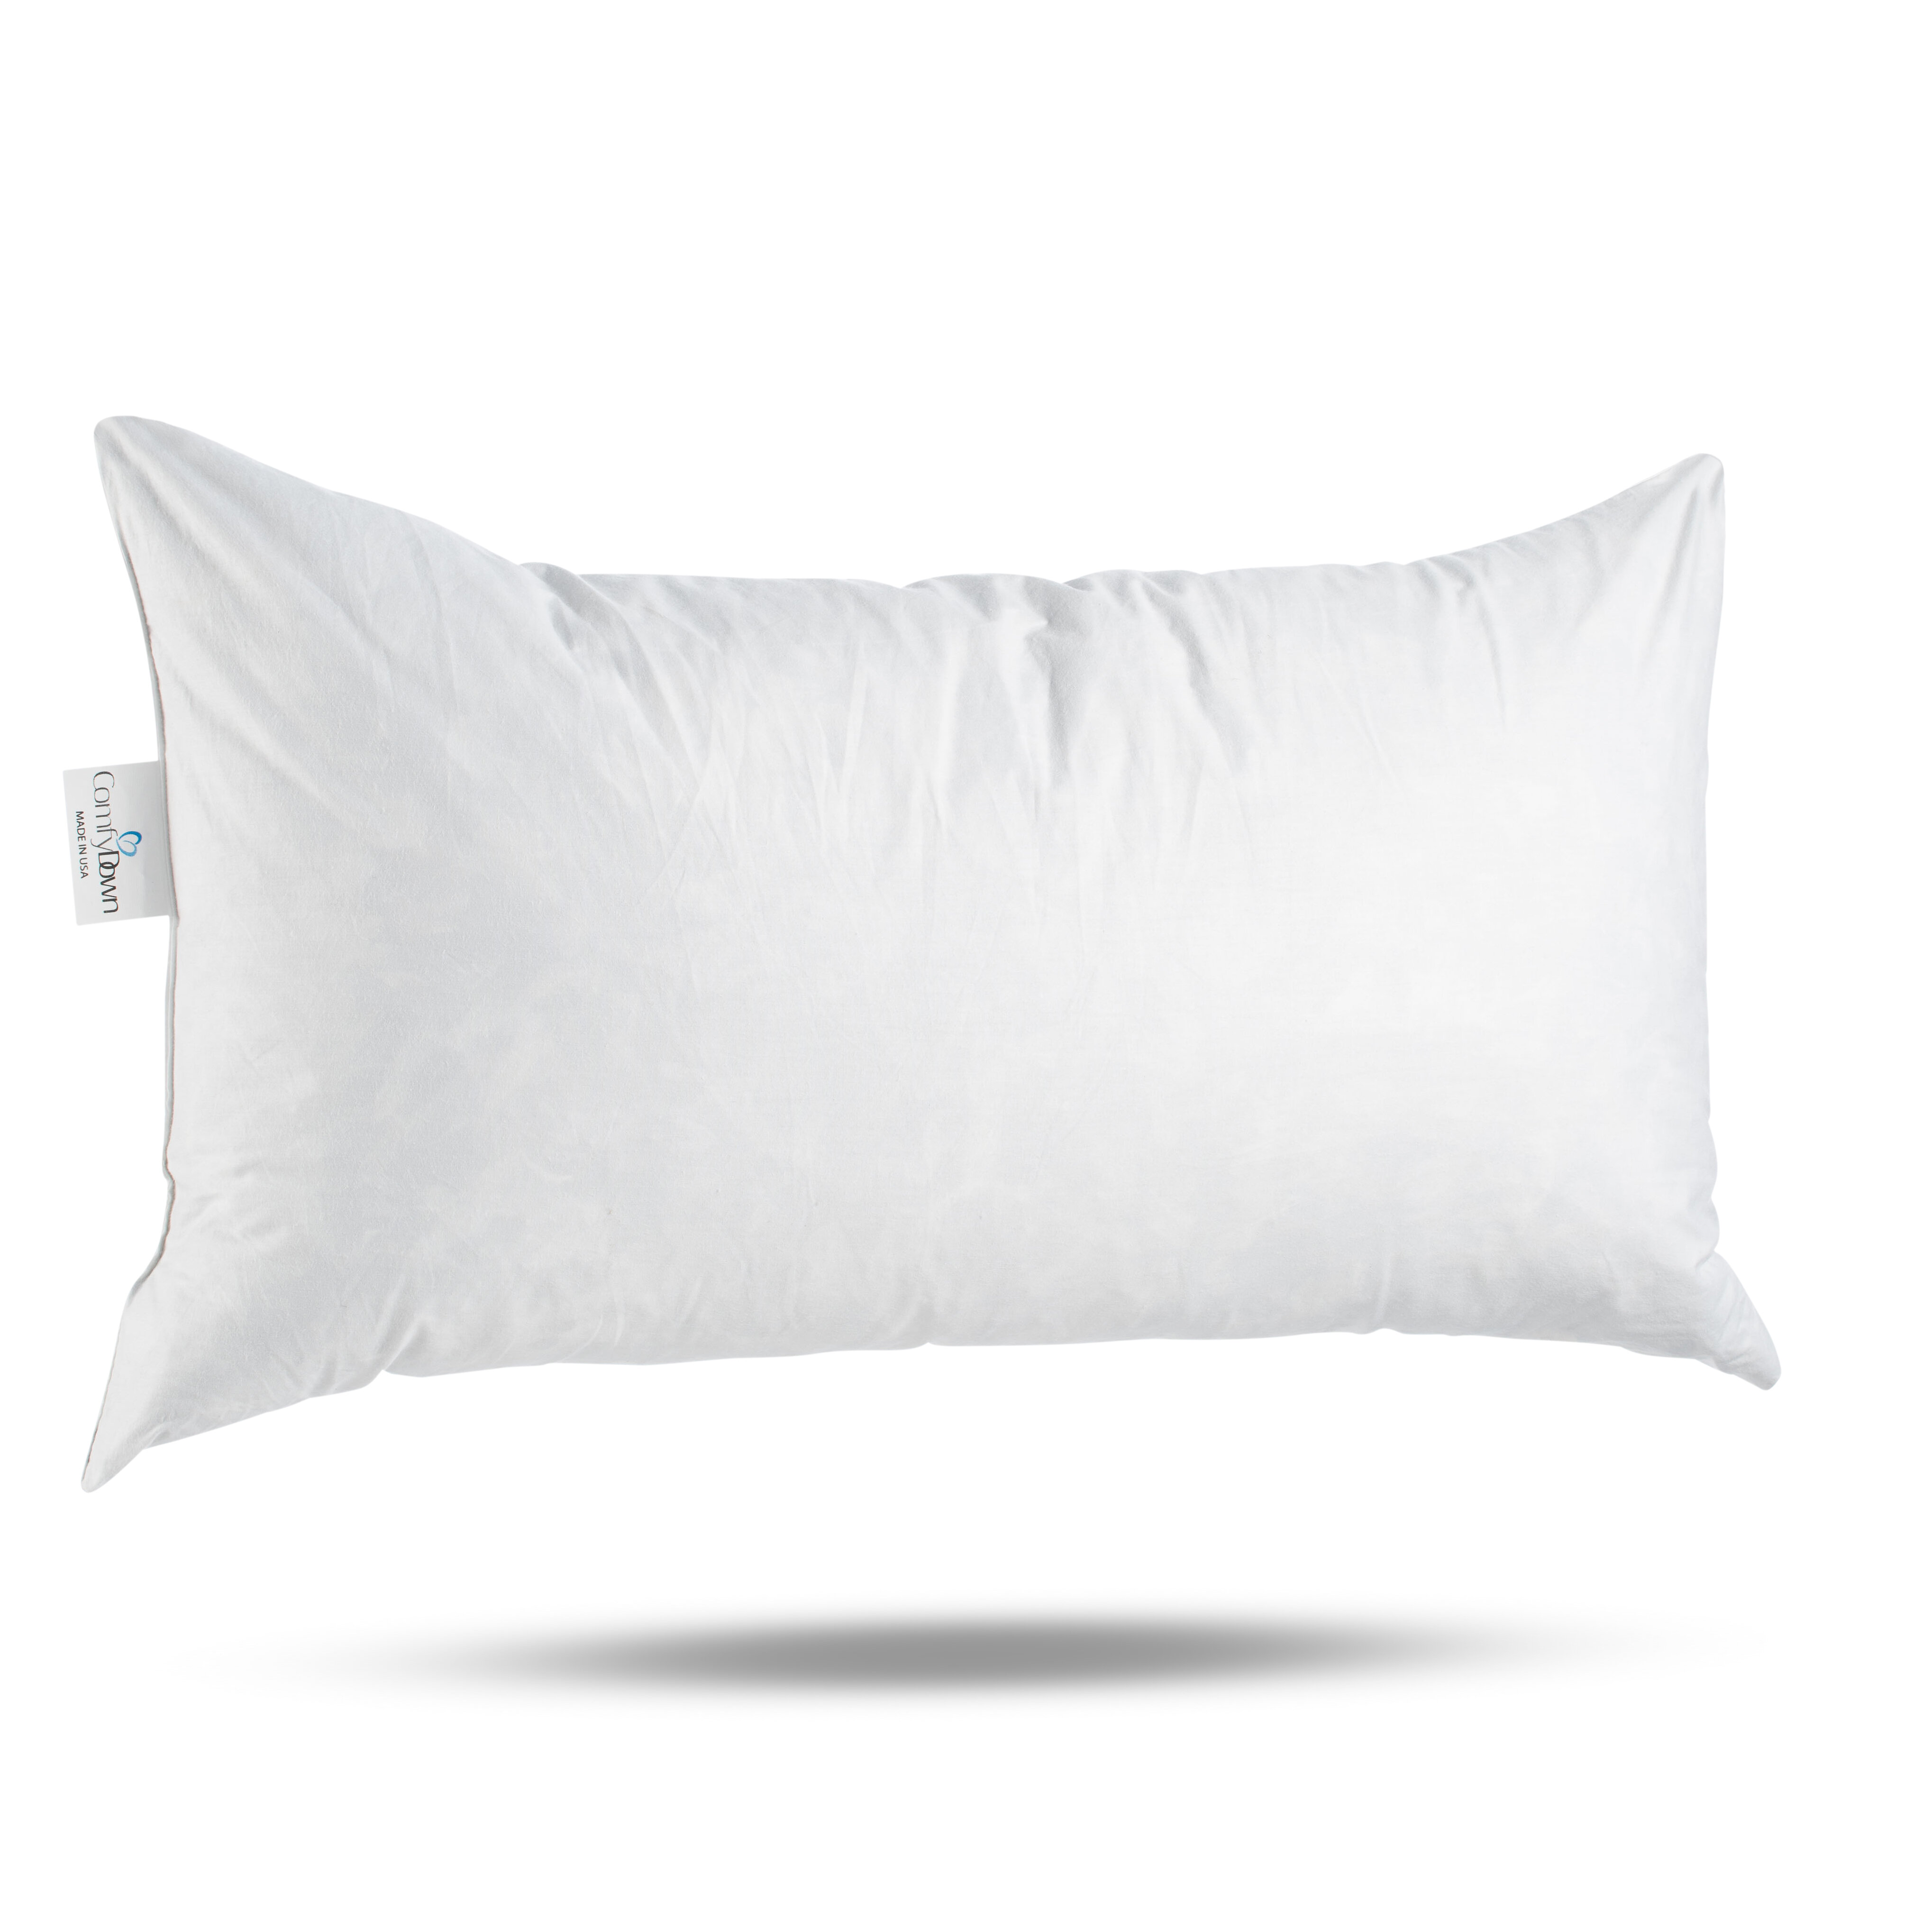 Alwyn Home Roisin Pillow Insert & Reviews